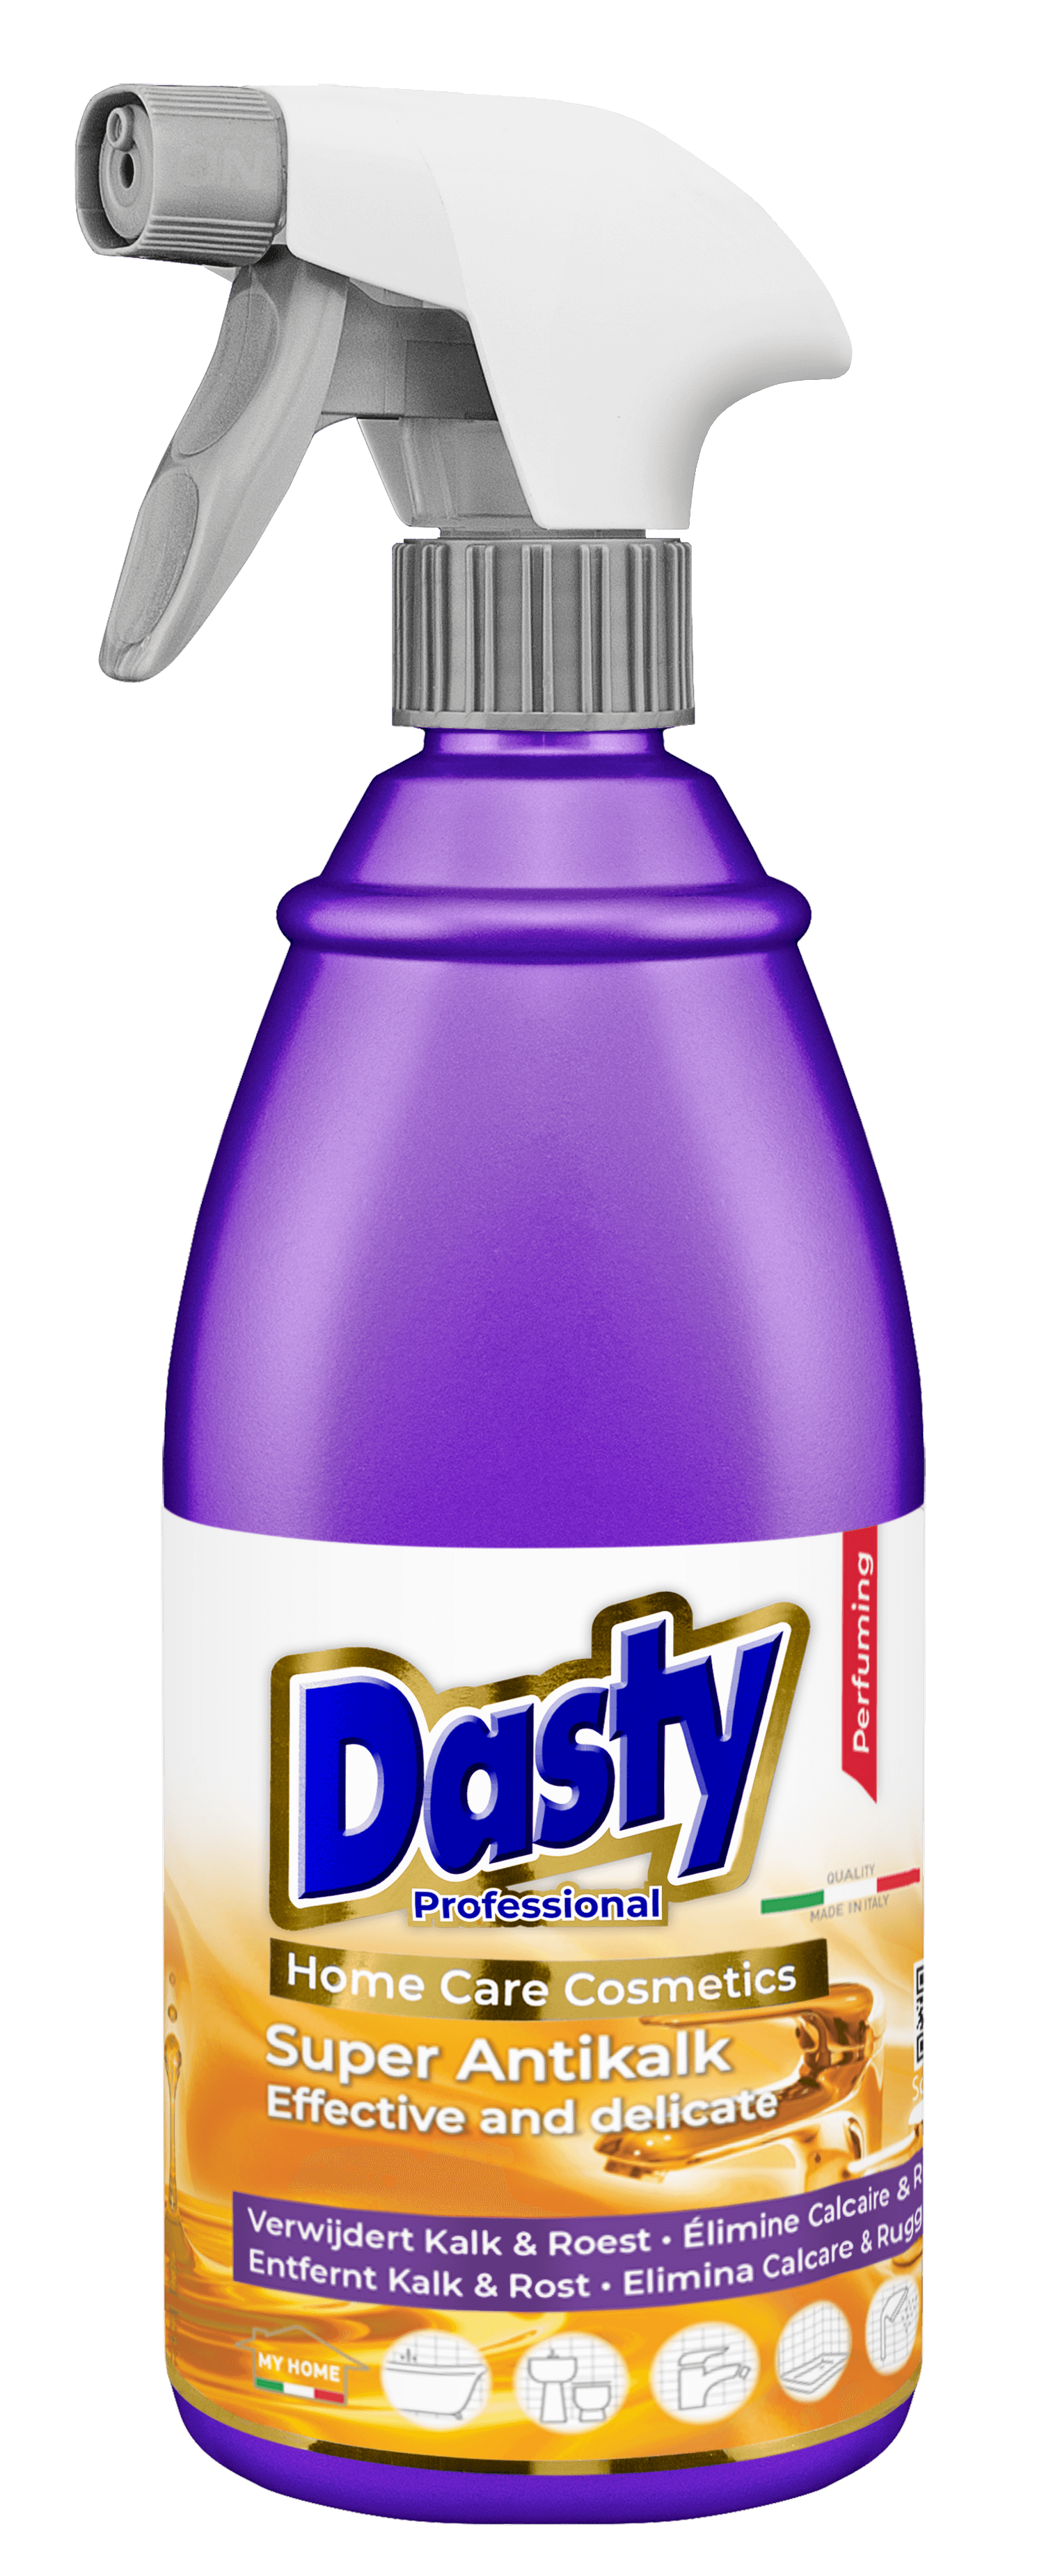 Dasty Home Care Cosmetics